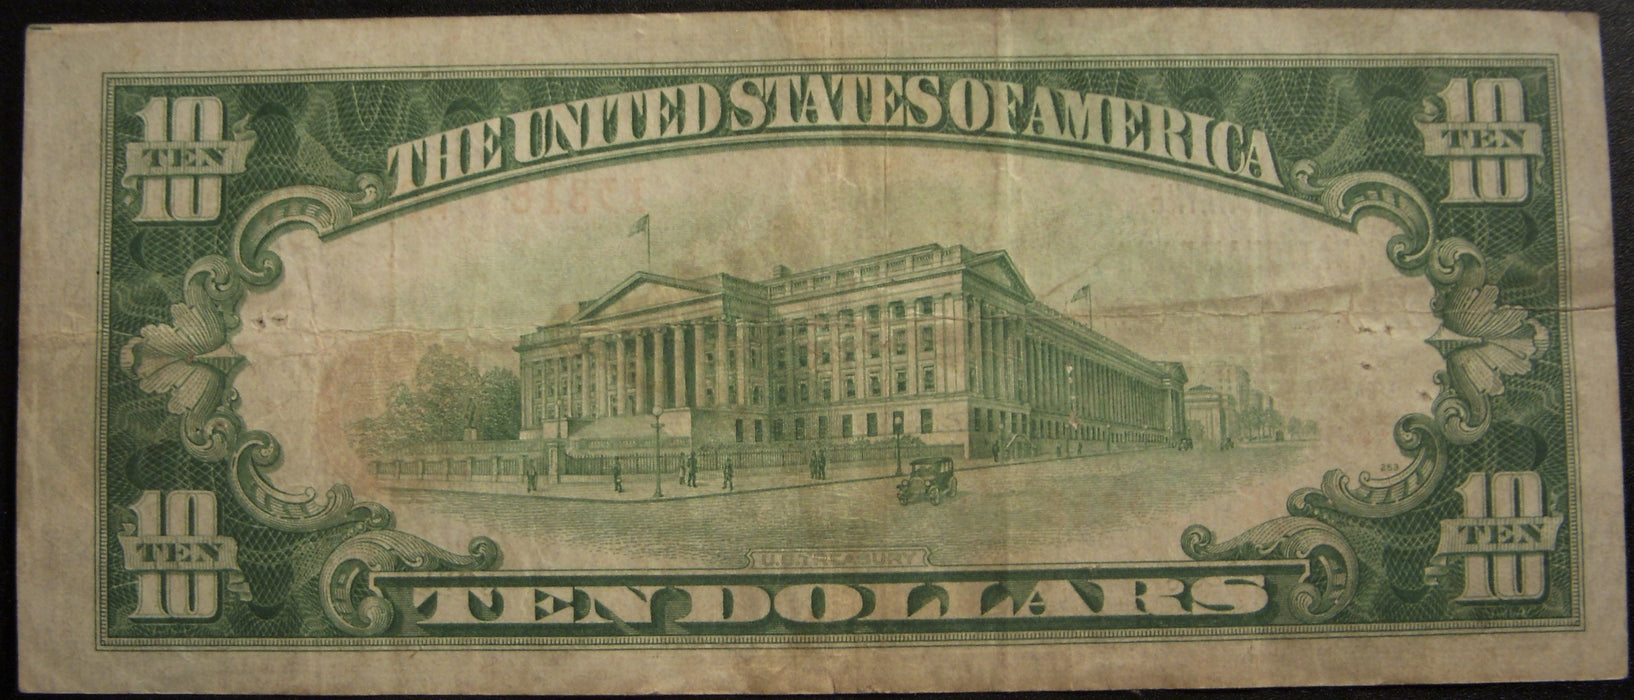 1929 $10 National Bank Note - Fort Wayne, IN Bank# 13818